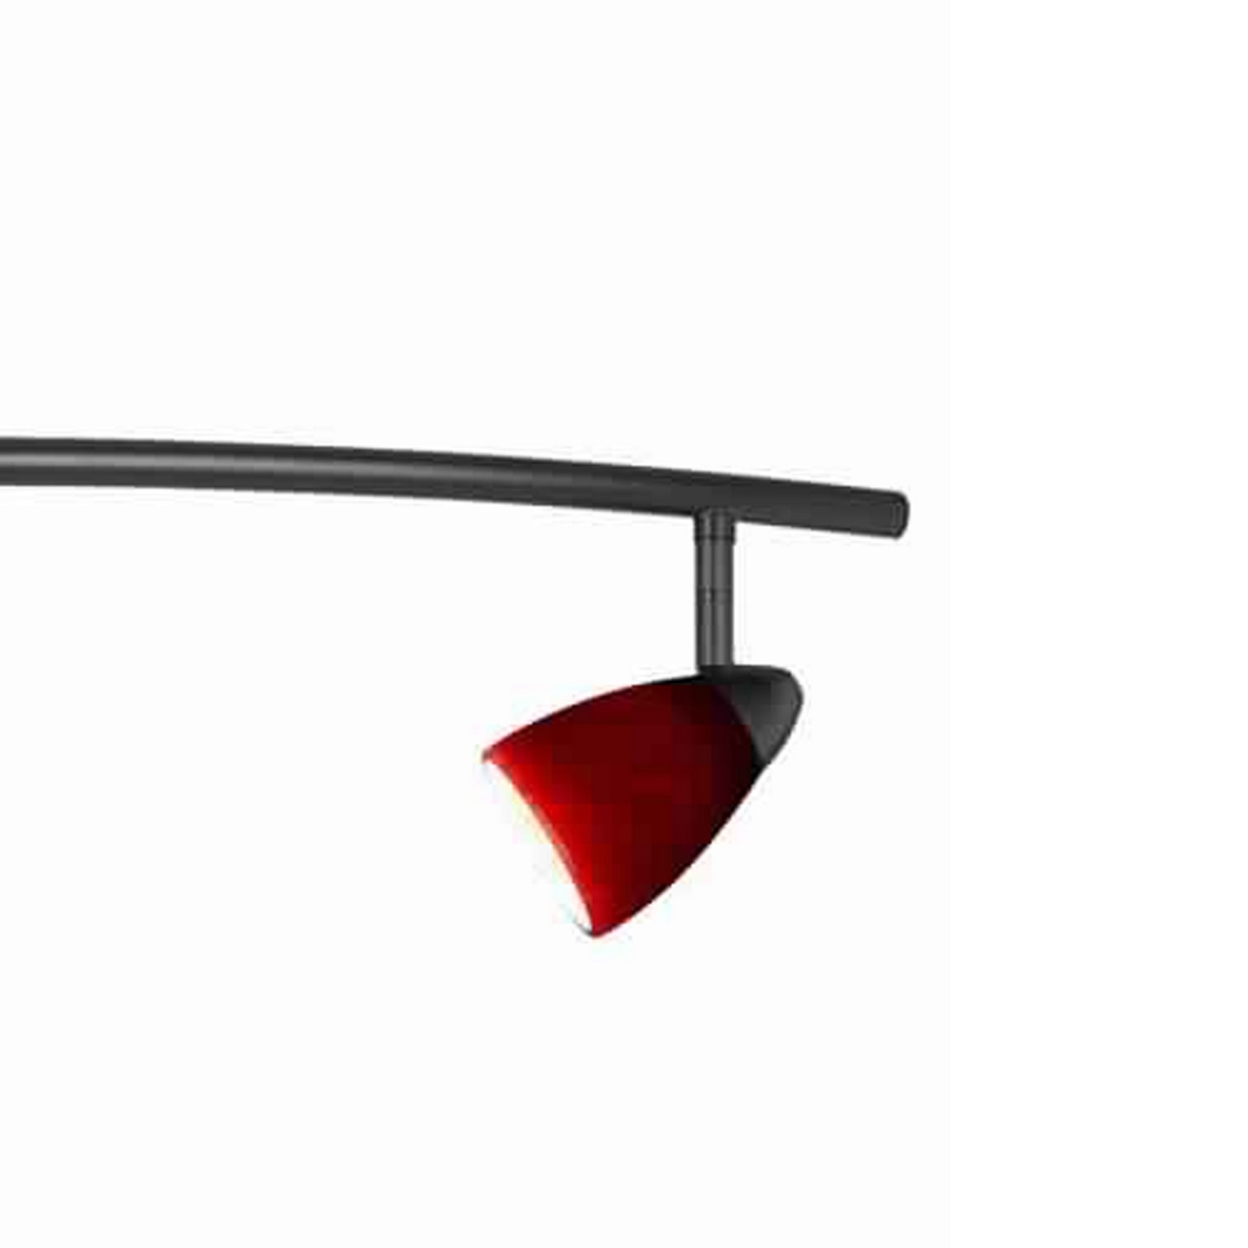 5 Light 120V Metal Track Light Fixture With Glass Shade, Black And Red- Saltoro Sherpi